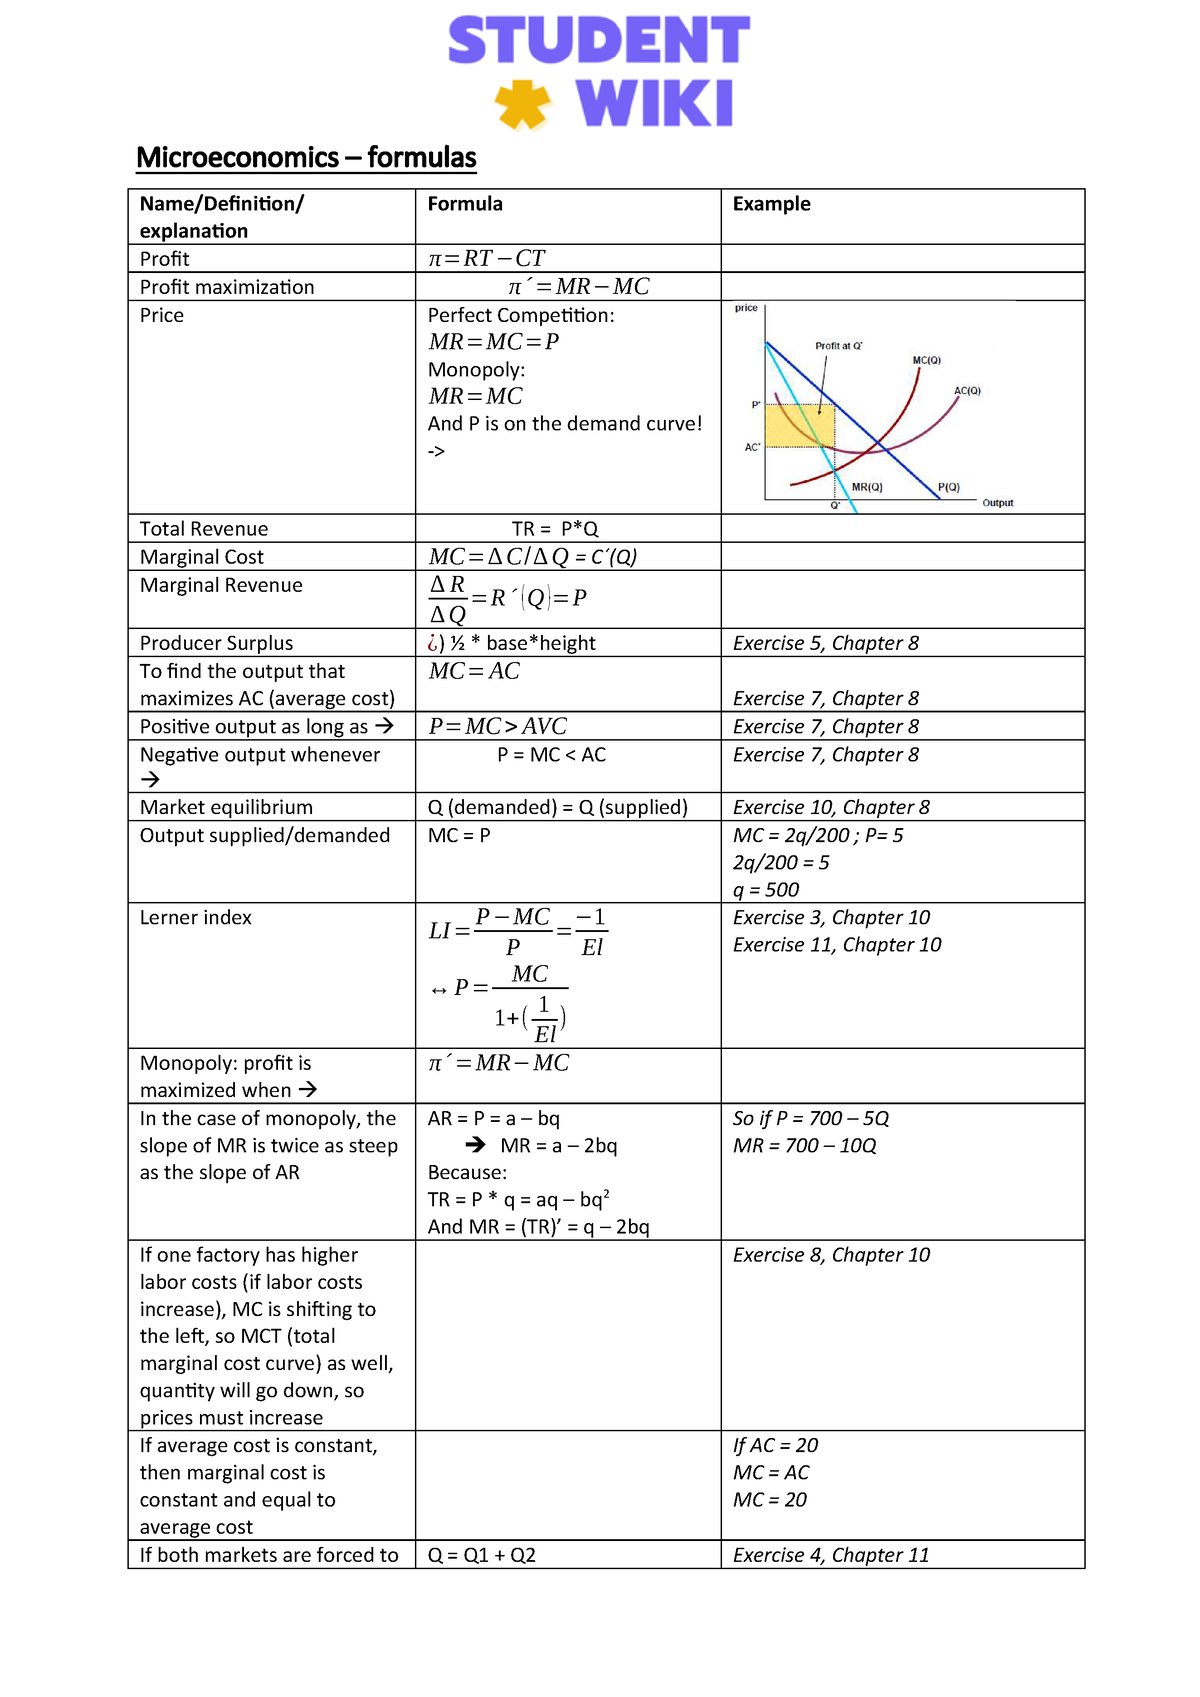 Economics Formula  List of Macro / Micro Economics Formulas